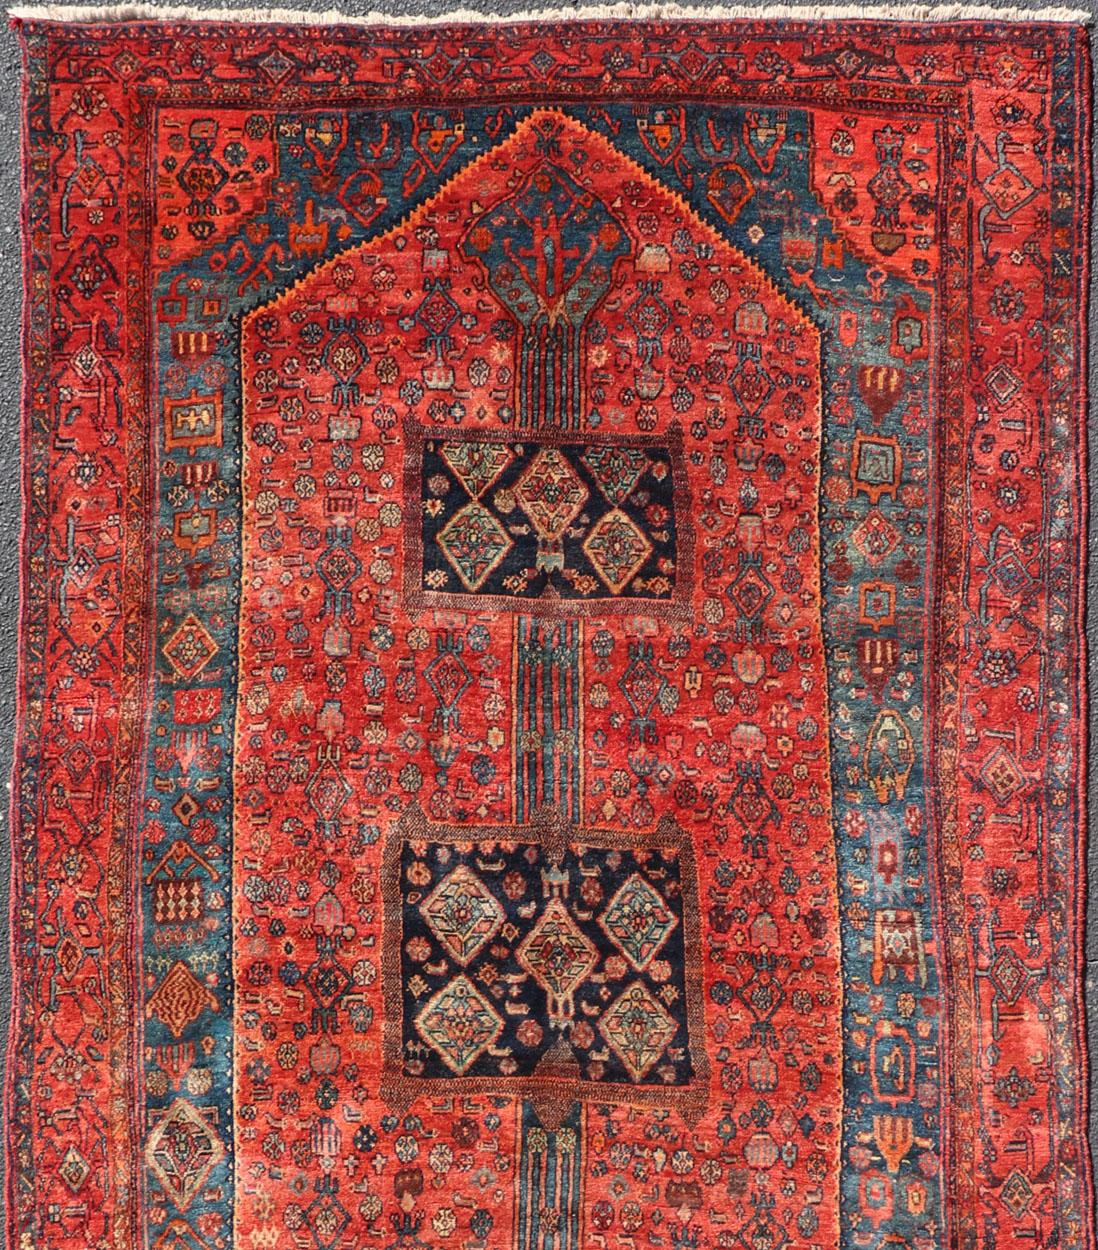 Antique Gallery Bidjar rug with tribal Design, Keivan Woven Arts/ rug/PTA-21021 country of origin / type: Persian / Bidjar, circa mid-20th Century.

Measures: 5'5 x 13'3.

Made is Kurdistan region of Persia, this beautiful antique Bidjar gallery rug